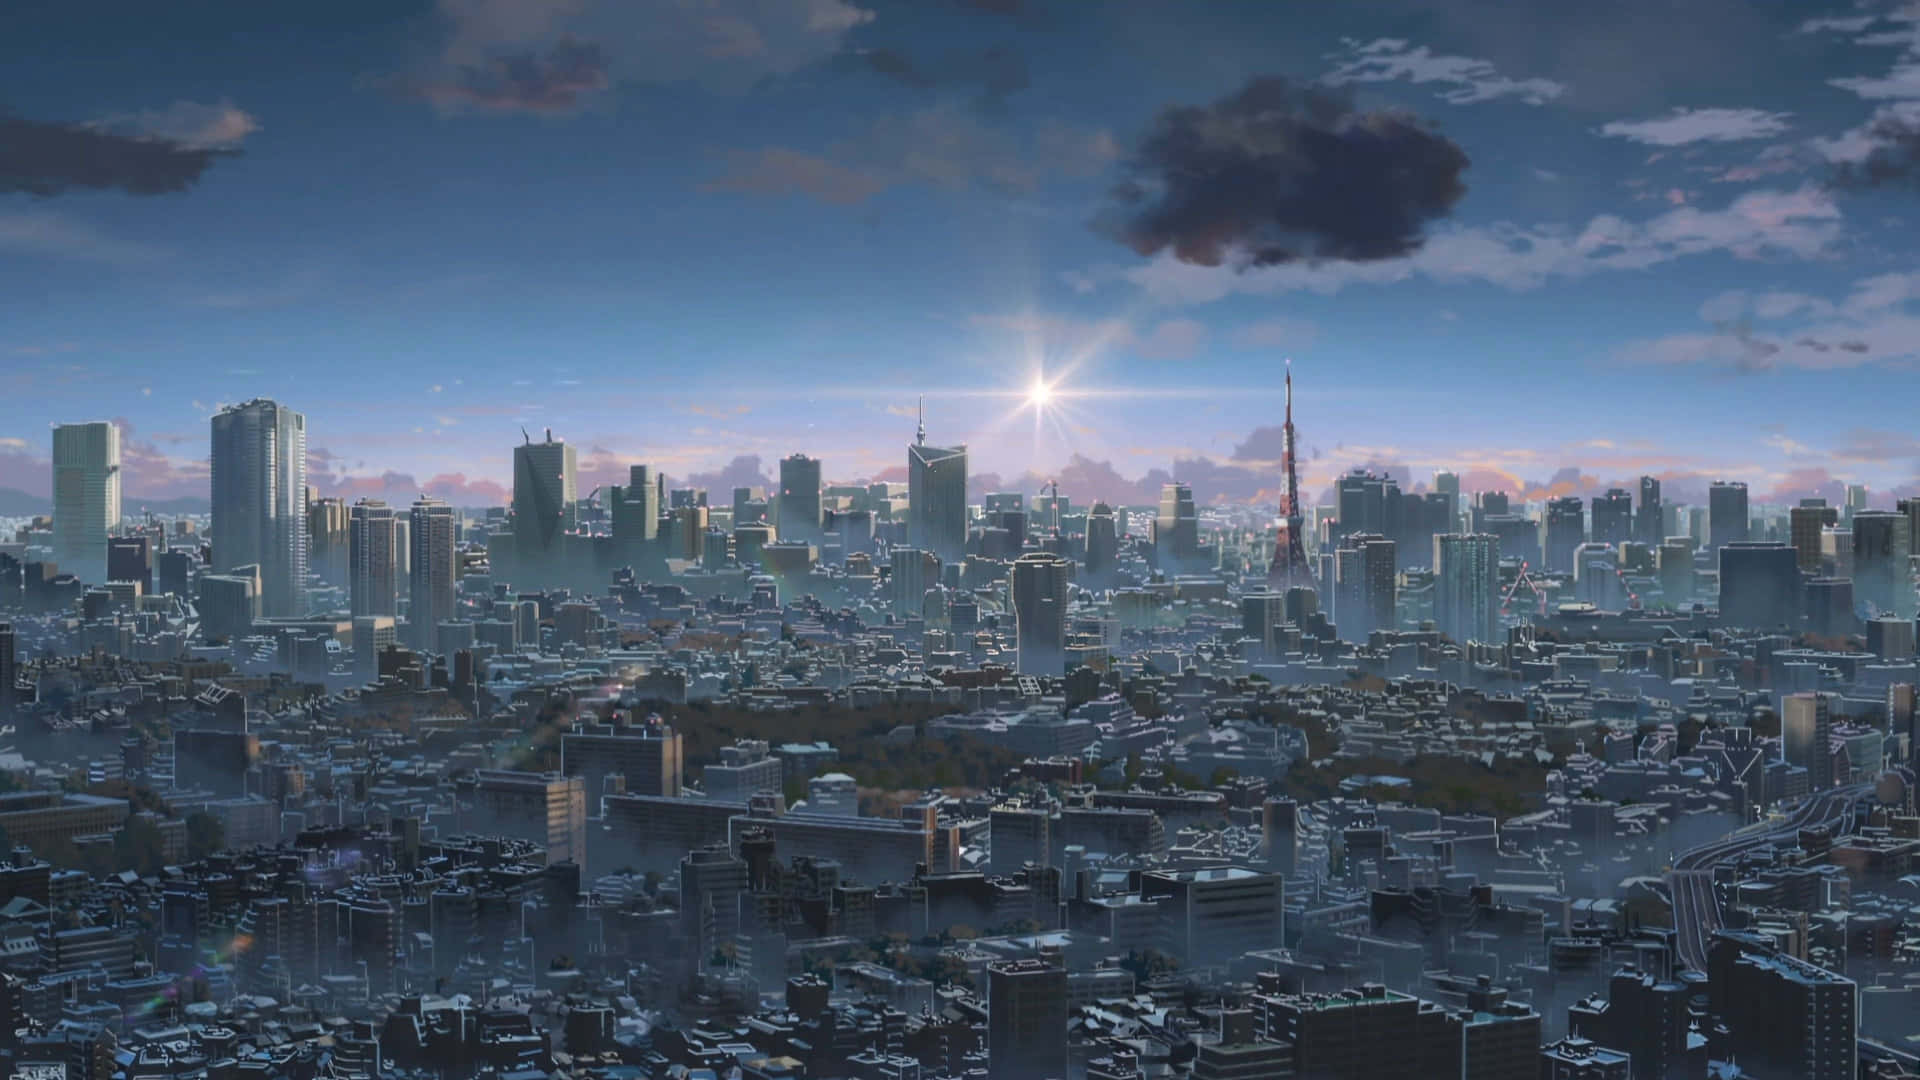 Makoto Shinkai, the talented Japanese animator